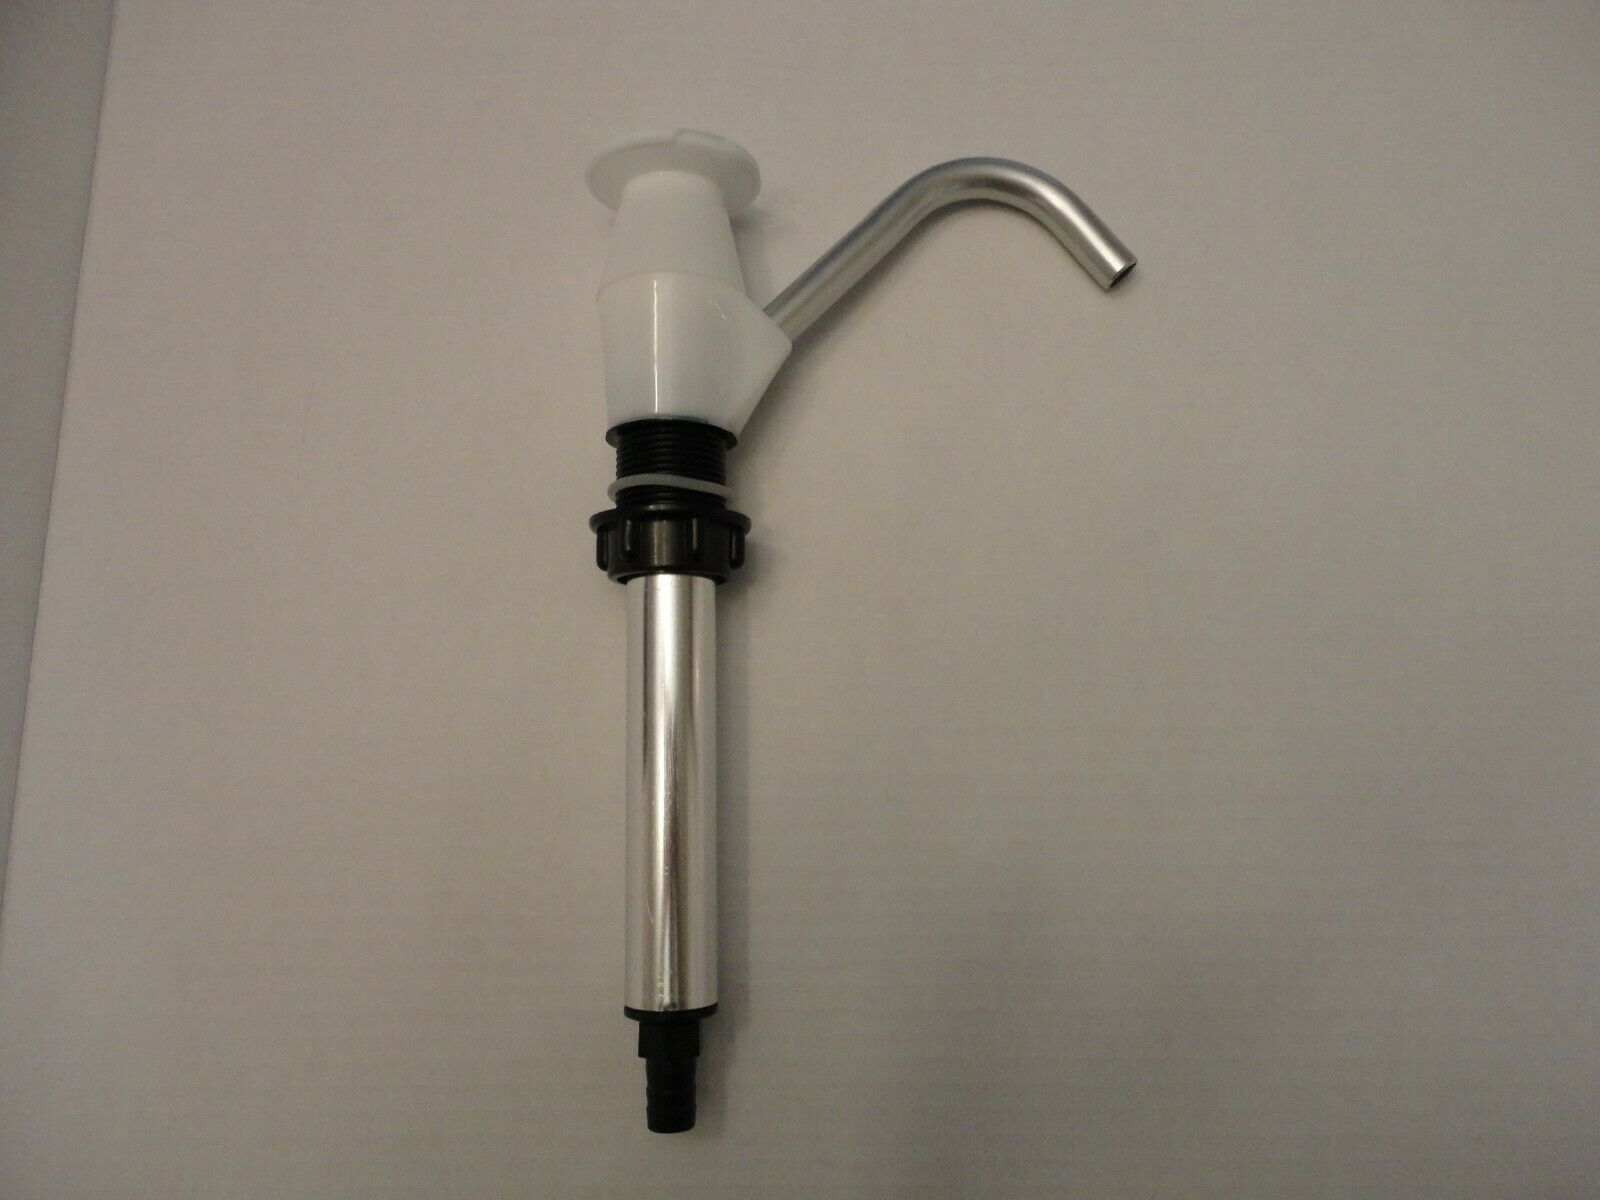 Manual Hand Press Drinking Water Pump Gallon Dispenser Syphon BBQ RV Boat Home - $21.24